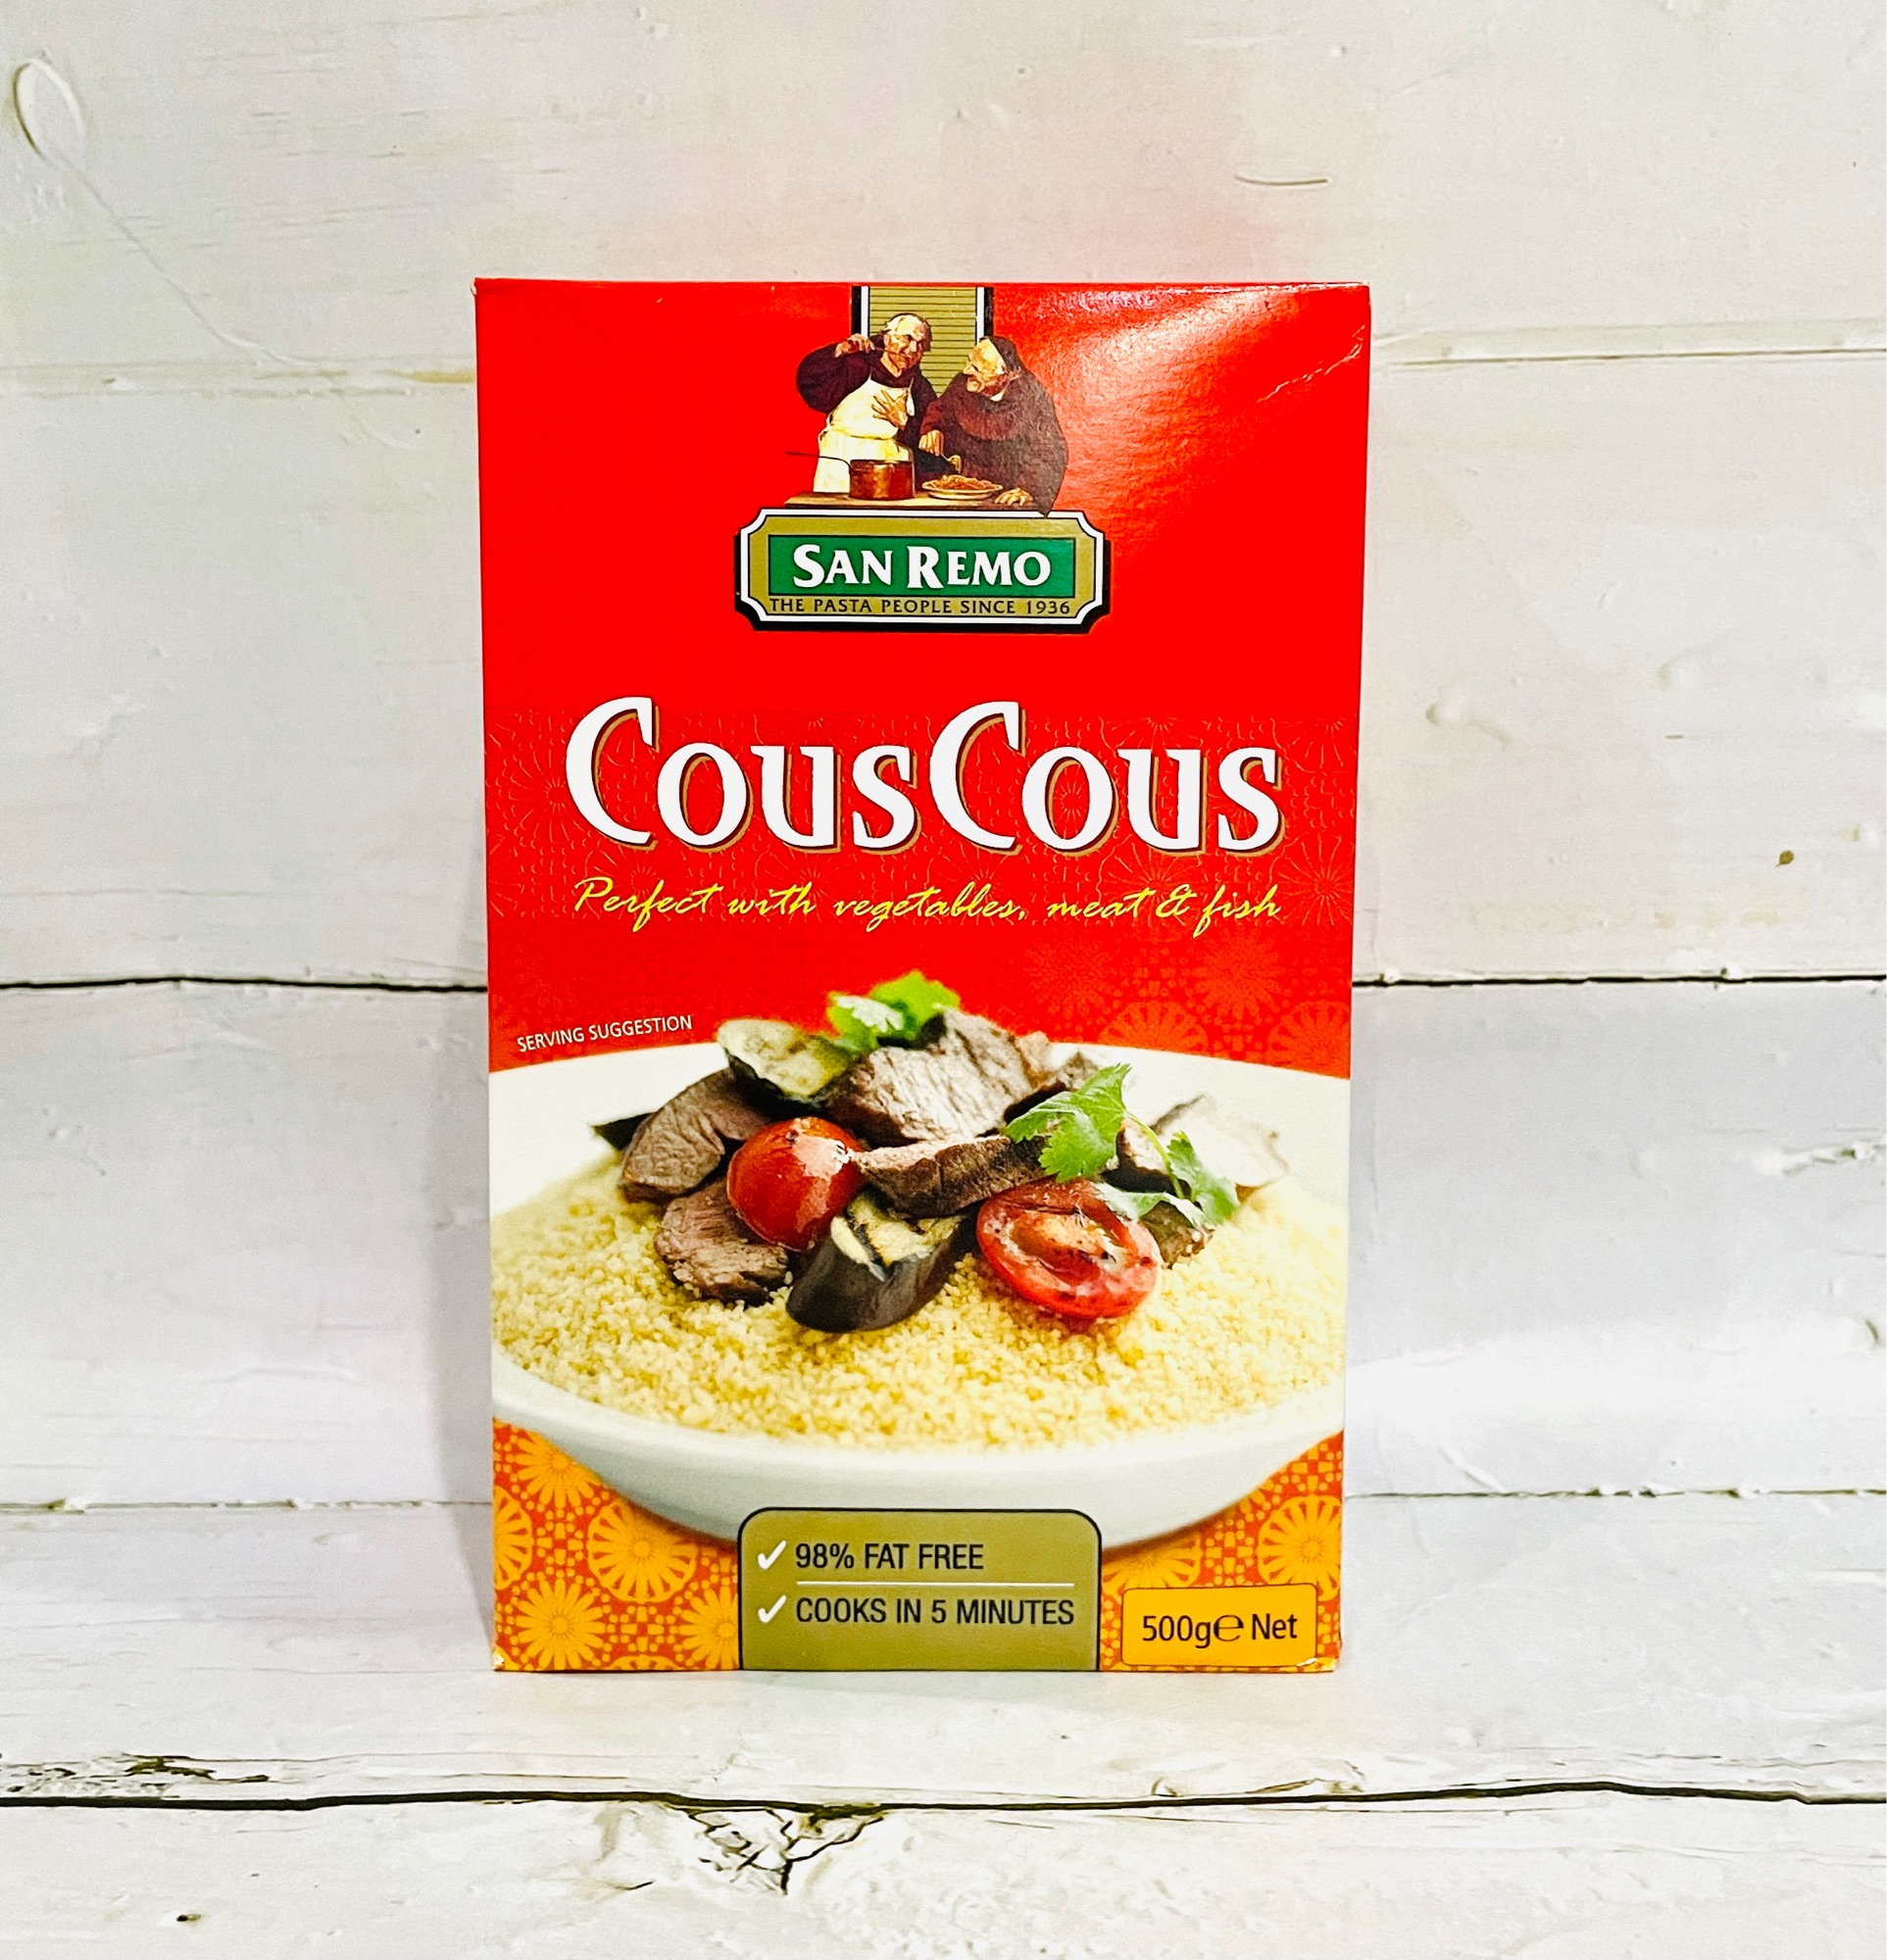 🇦🇺 Couscous “SAN REMO” คูส คูส ข้าวสาลีป่น 500g